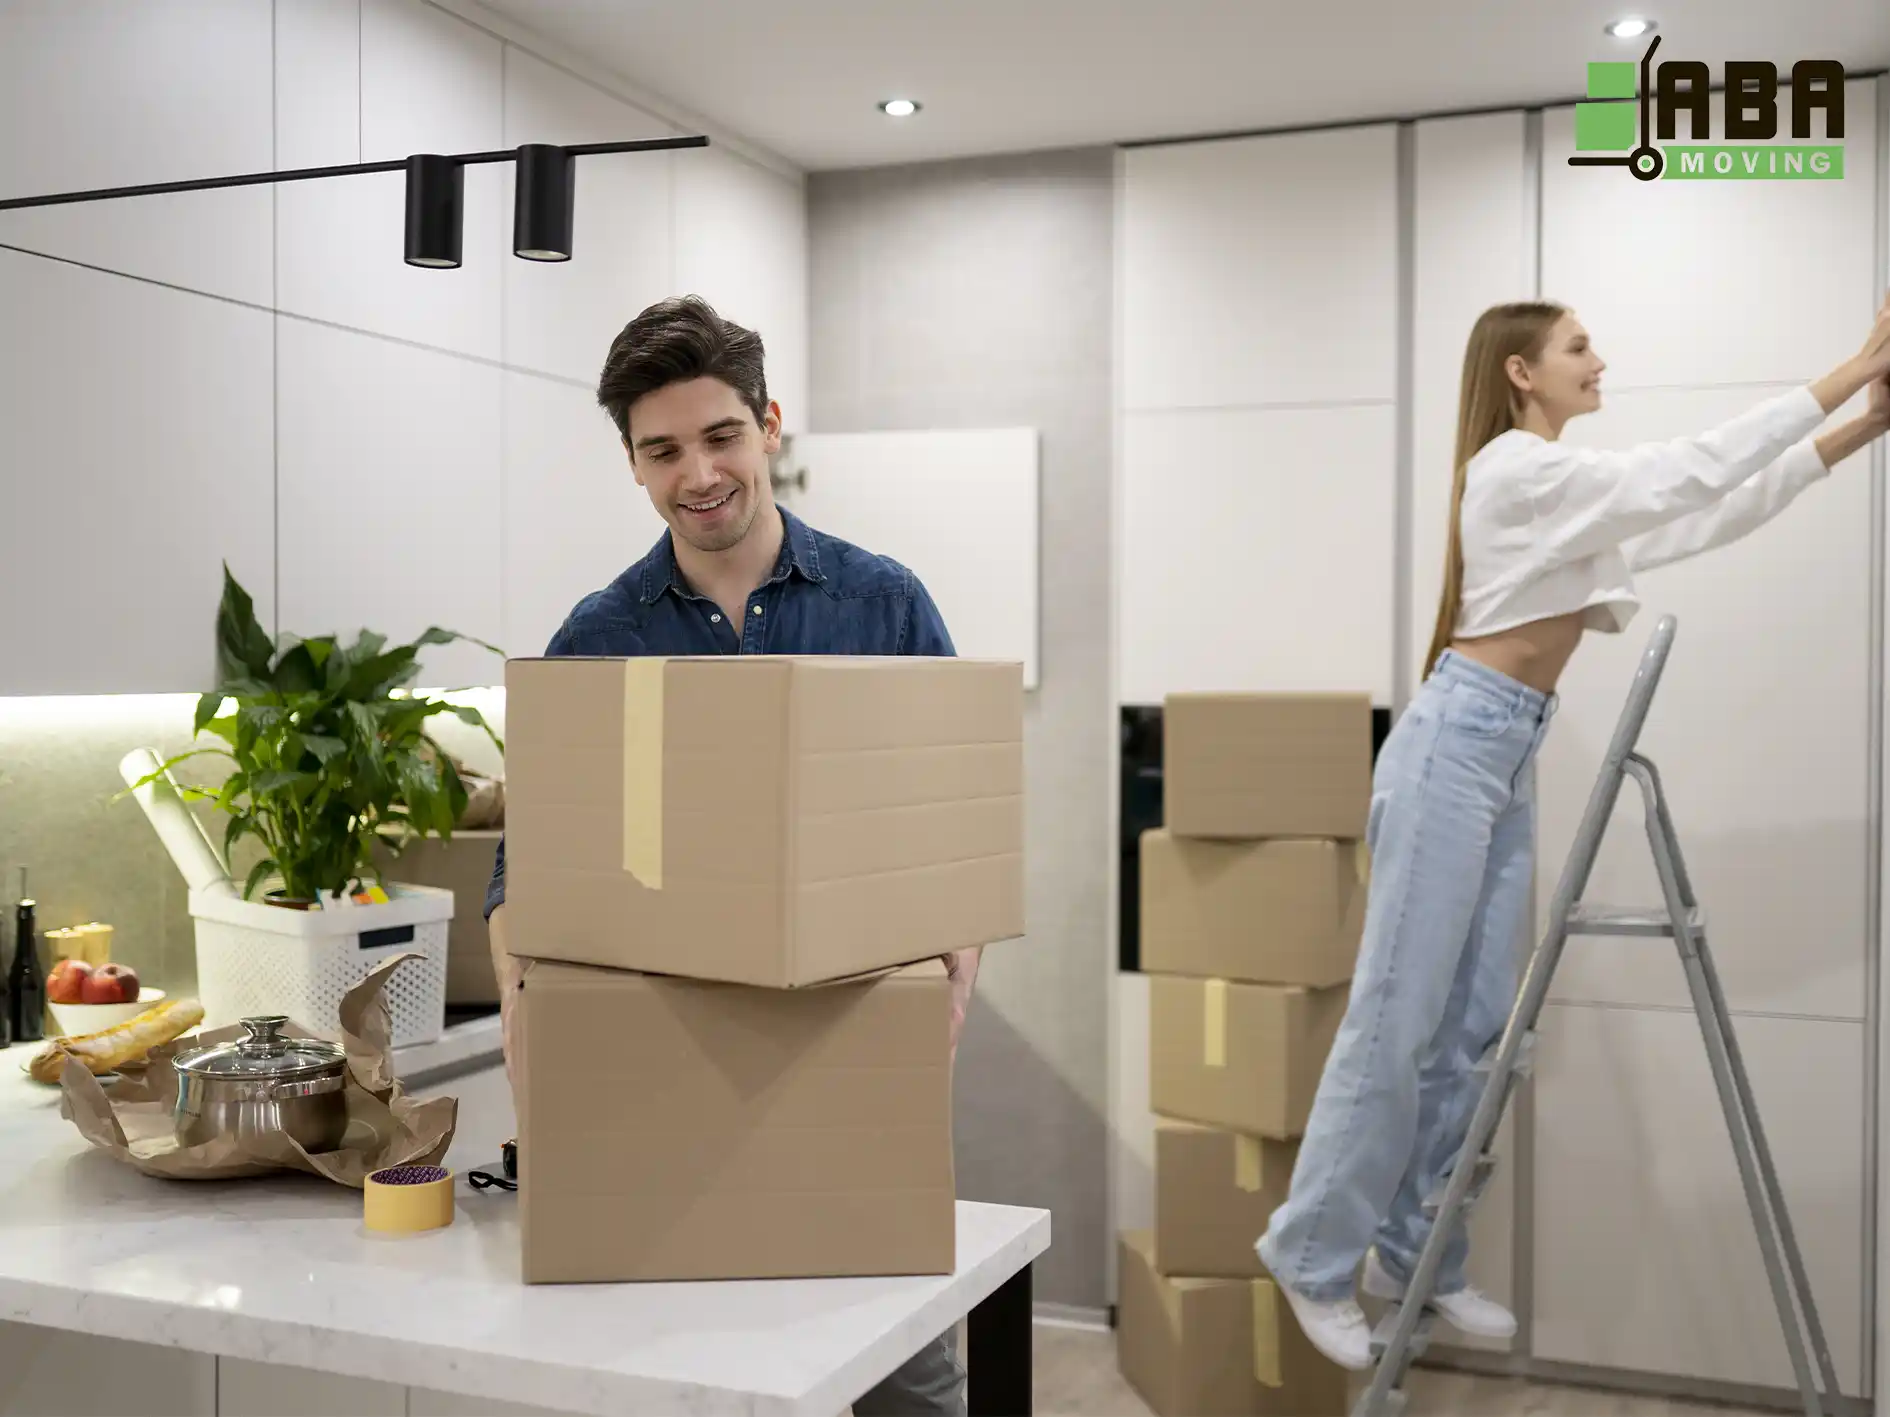 ABA Moving Customer Unpacking Boxes